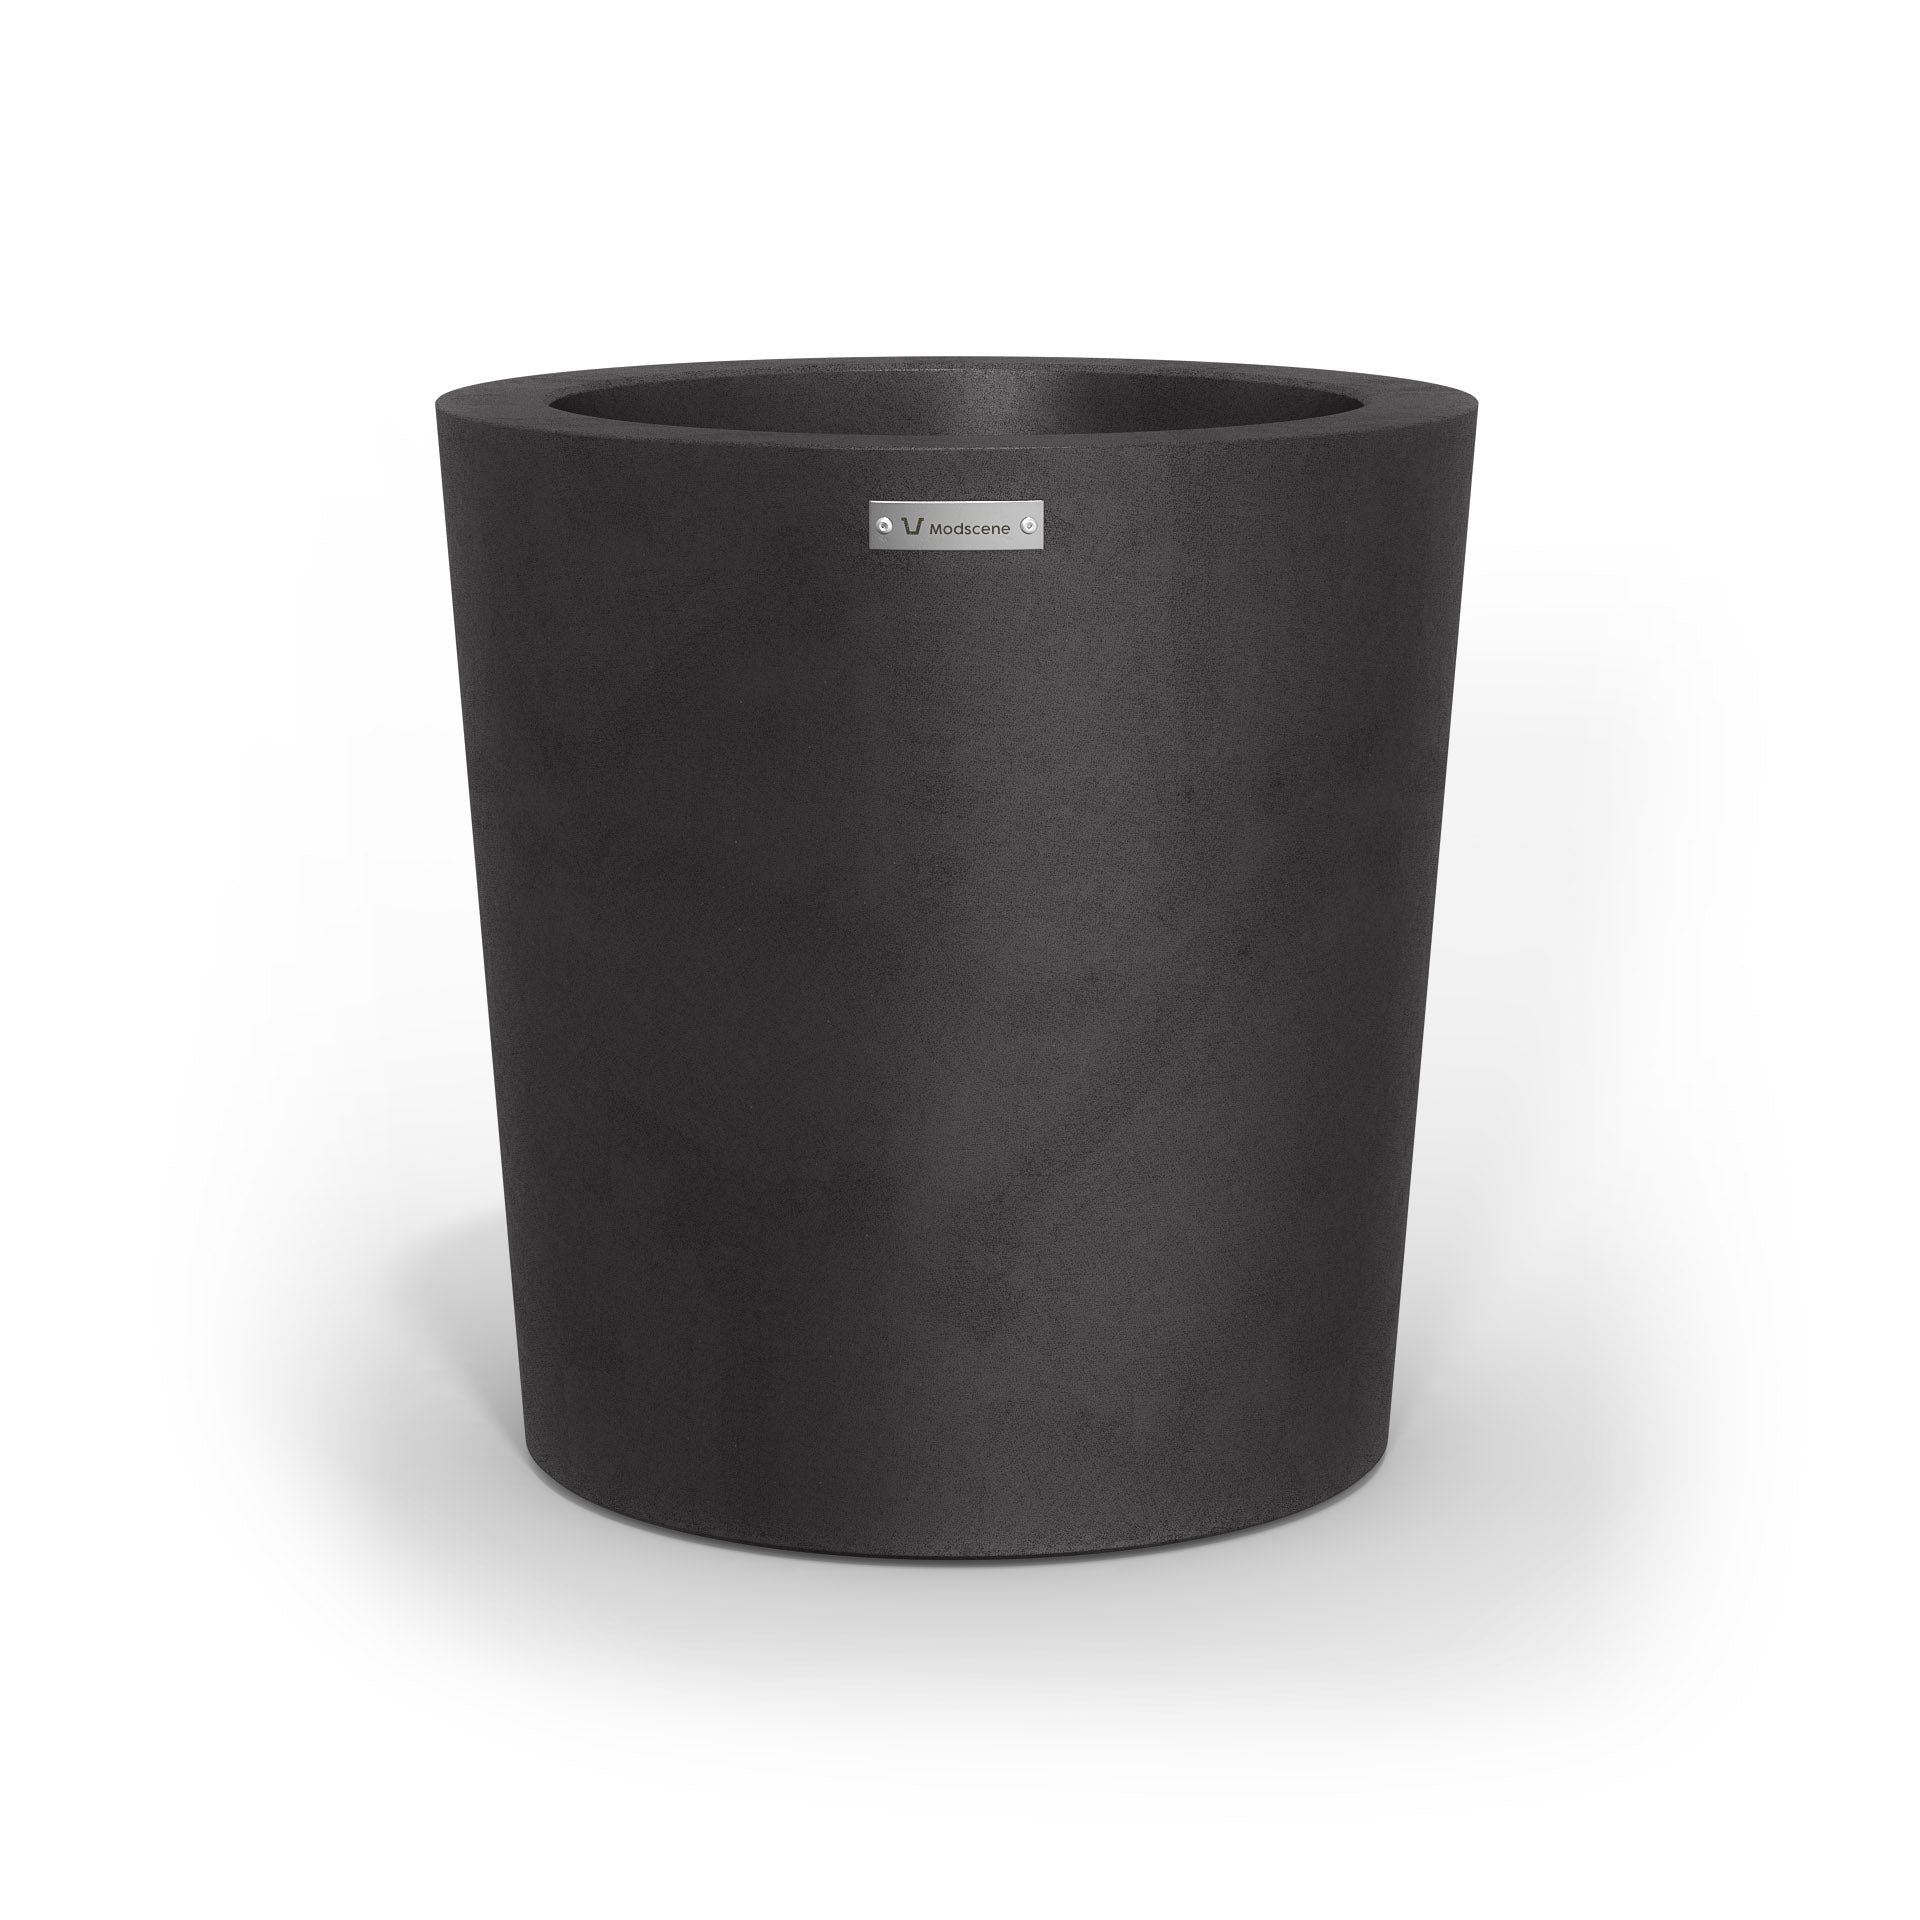 A modern designer planter pot in a matte black colour. 